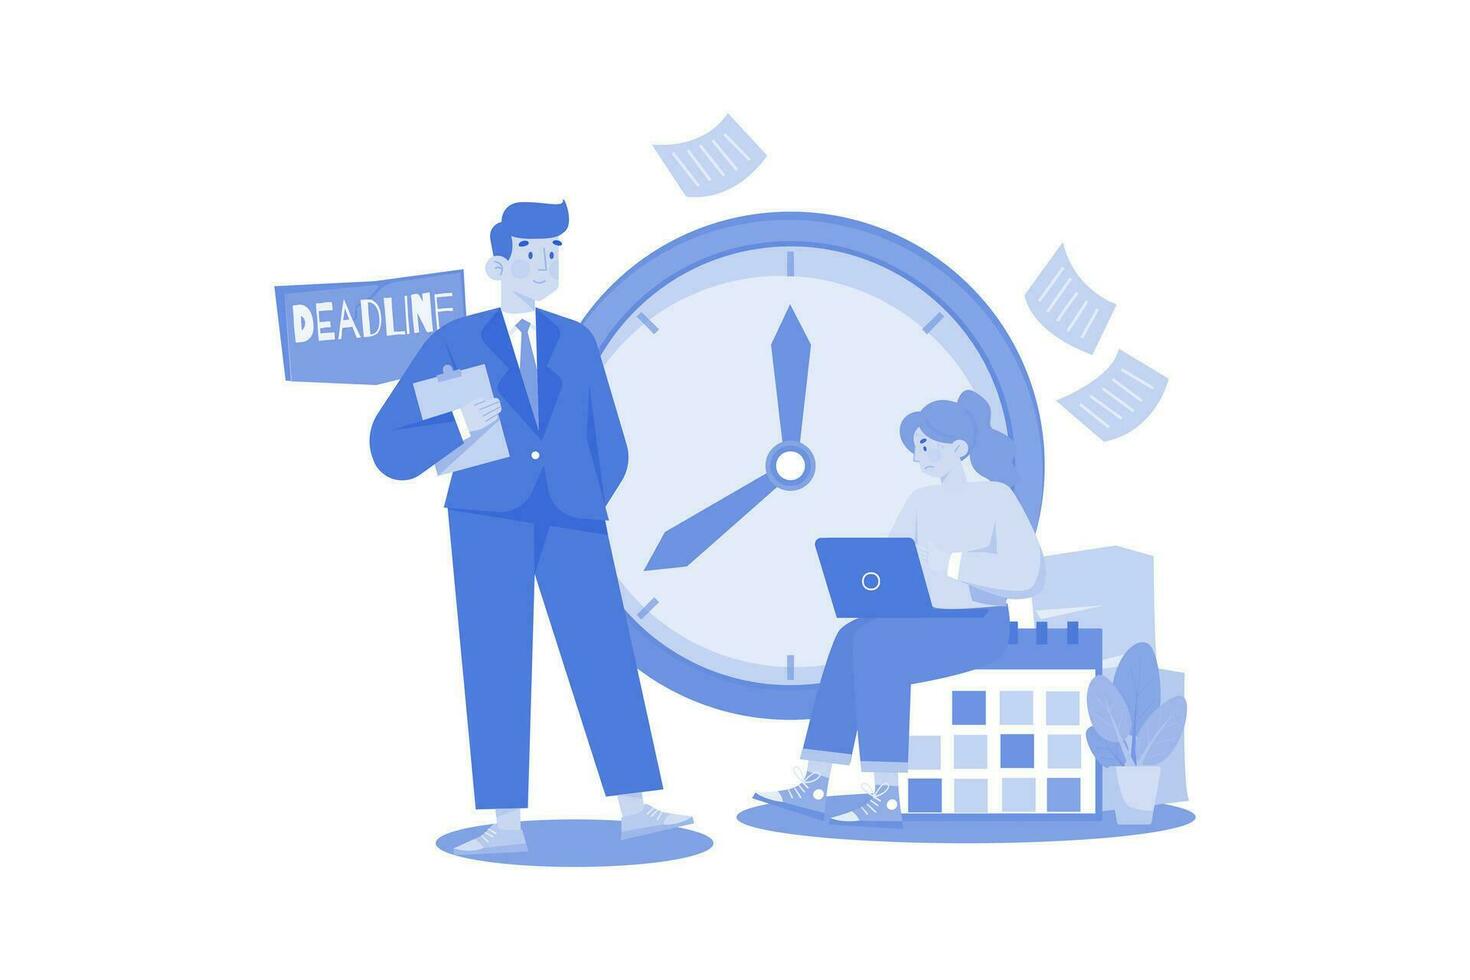 Work Deadline Illustration concept on a white background vector